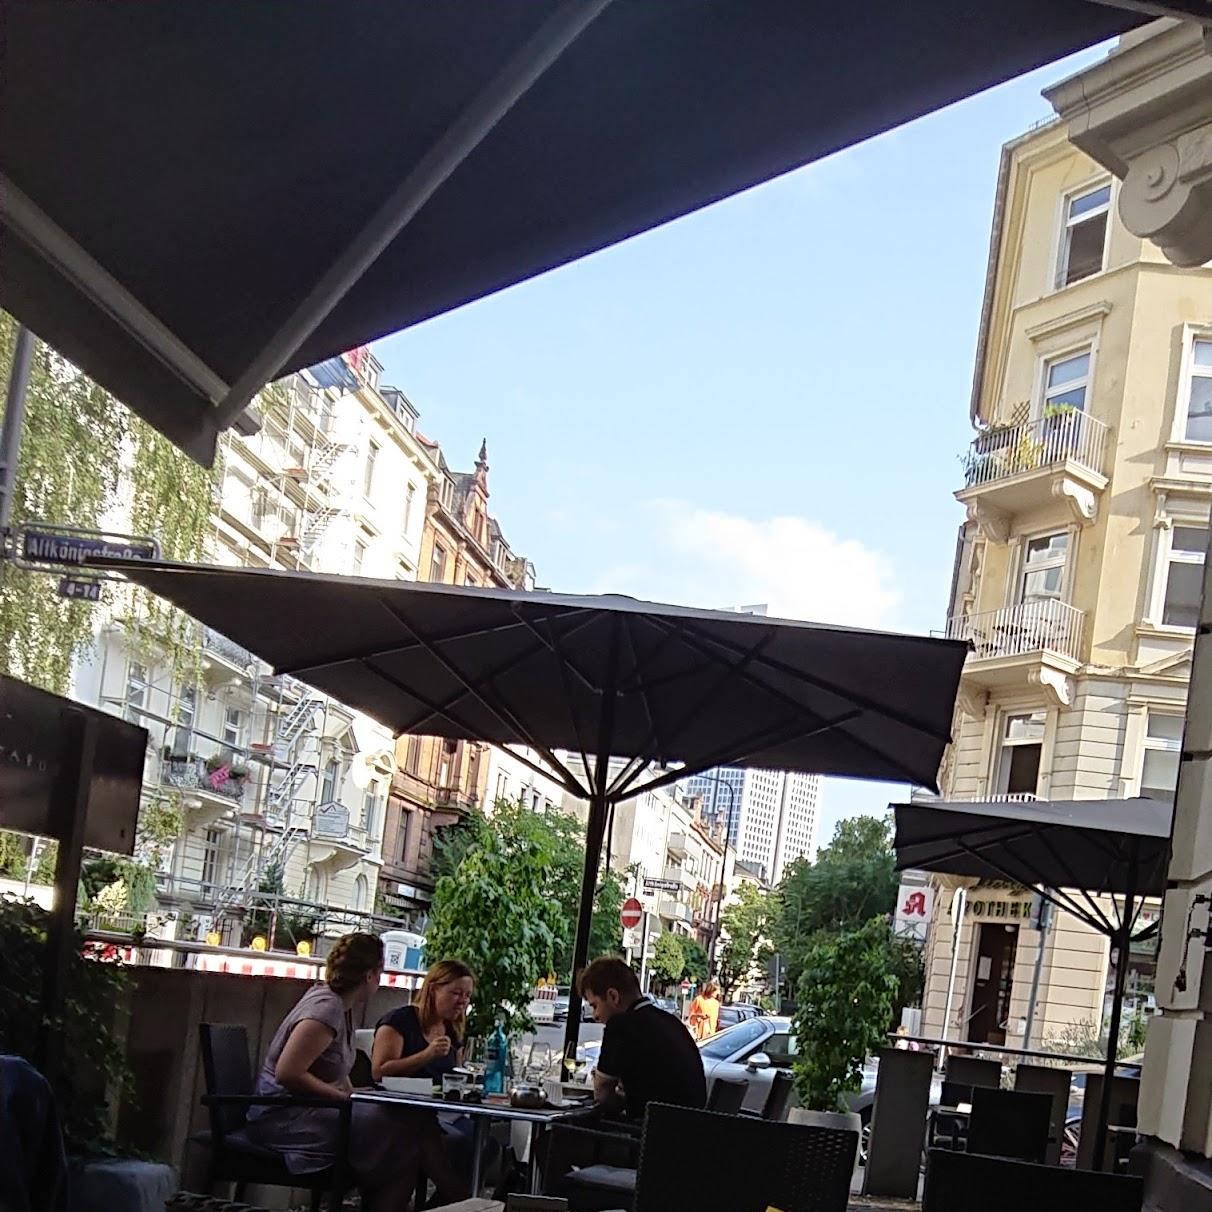 Restaurant "Café Bar Taboo" in Frankfurt am Main